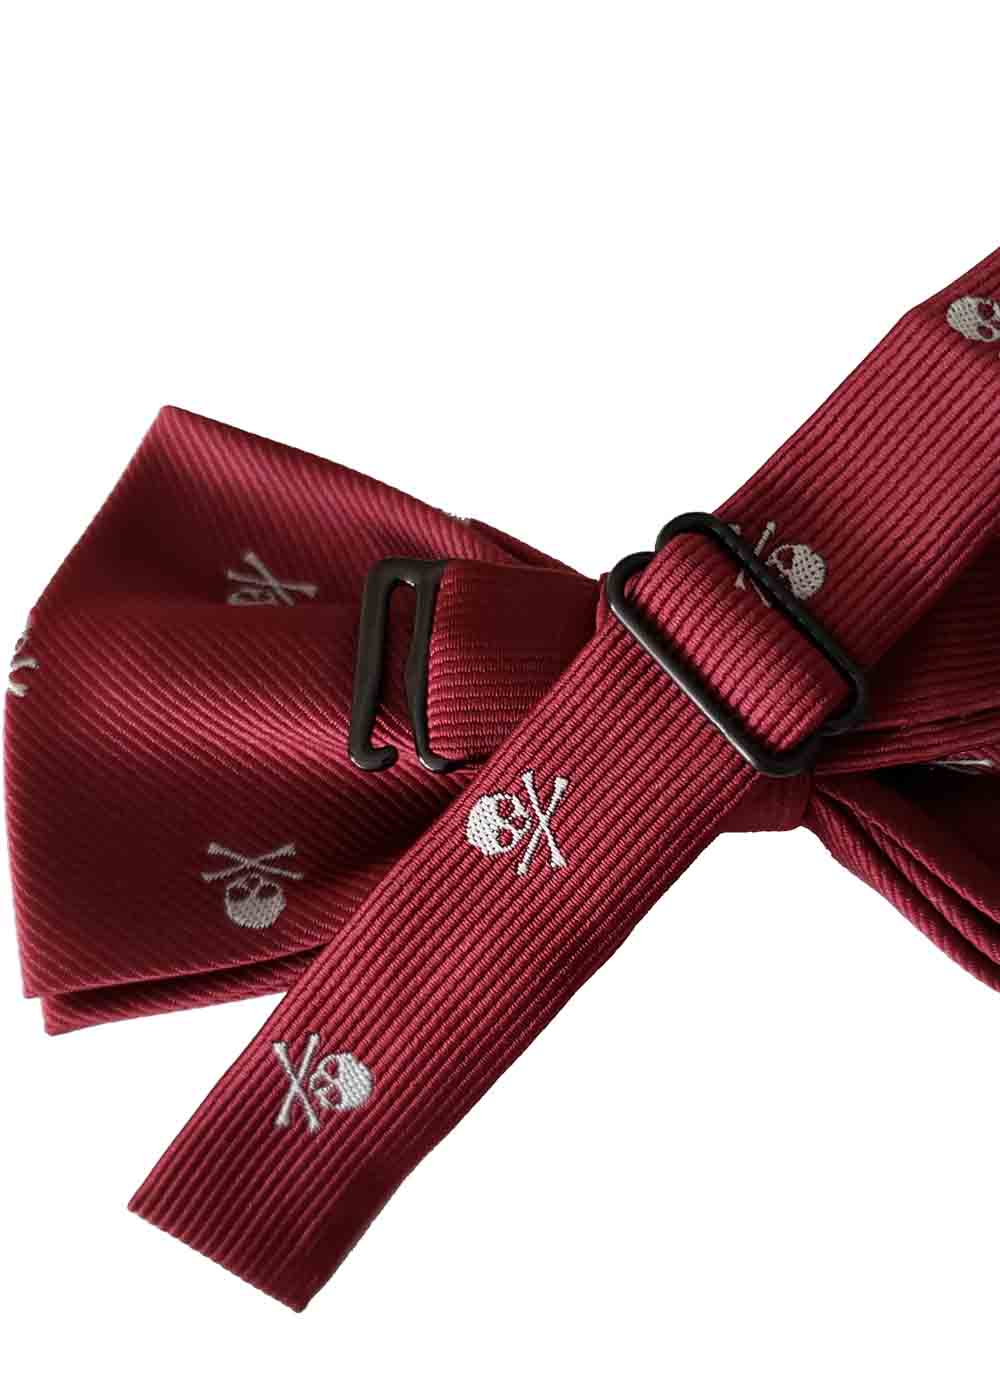 Gascoigne Skull & Crossbones Bow Tie Red White Pre-Tied Adjustable Men's